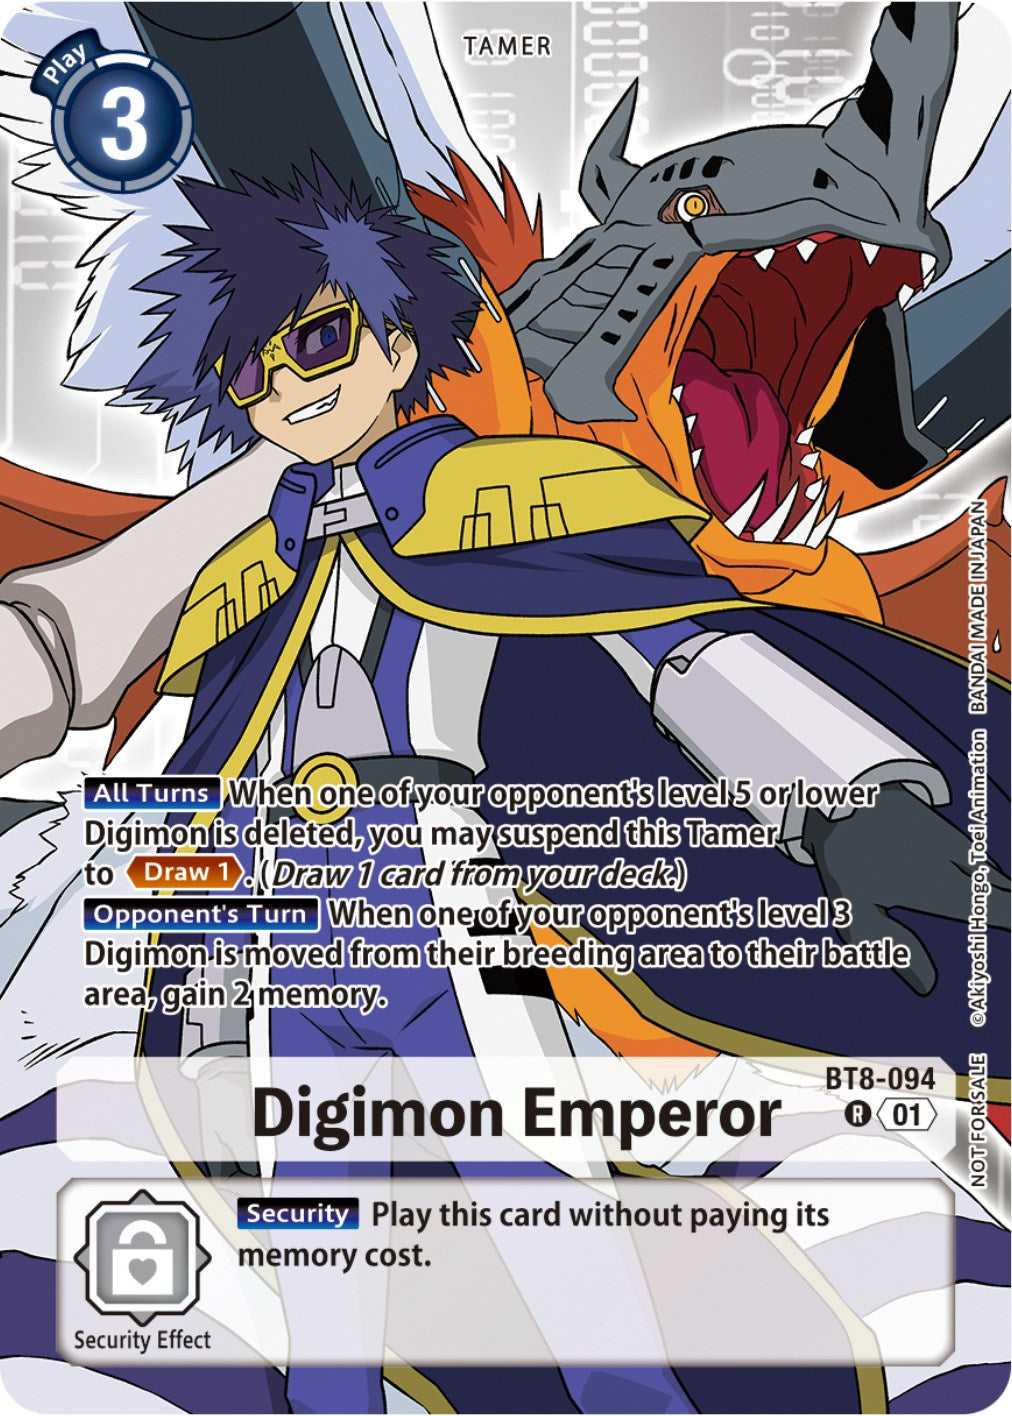 Digimon Emperor [BT8-094] (Tamer Party Pack -The Beginning-) [New Awakening] | Total Play